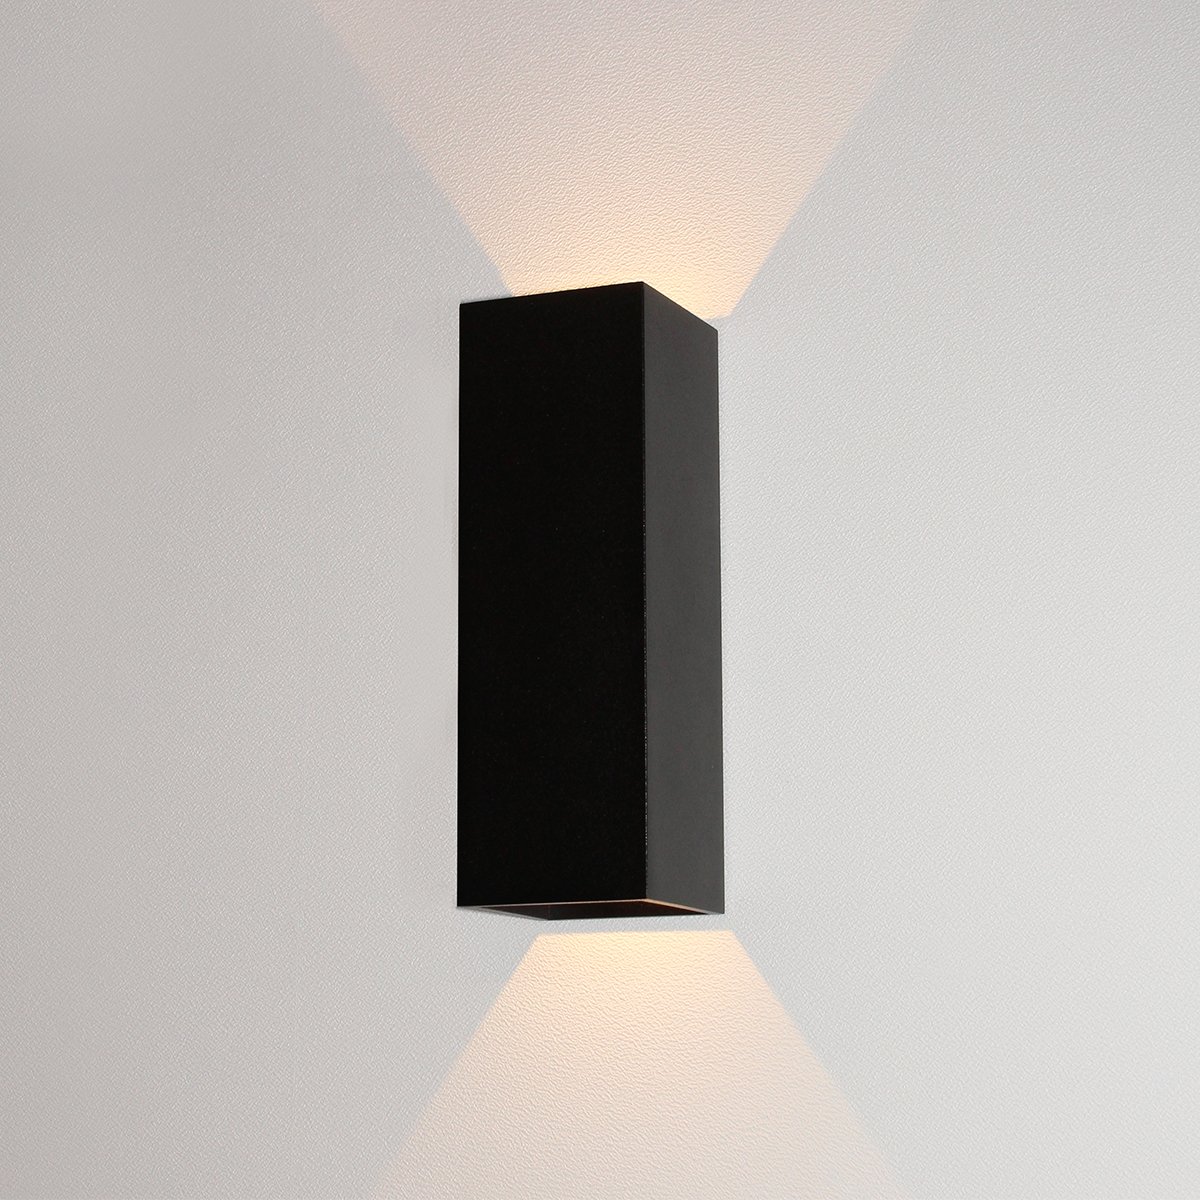 Wall light led Up Down black Arbus - 25 cm